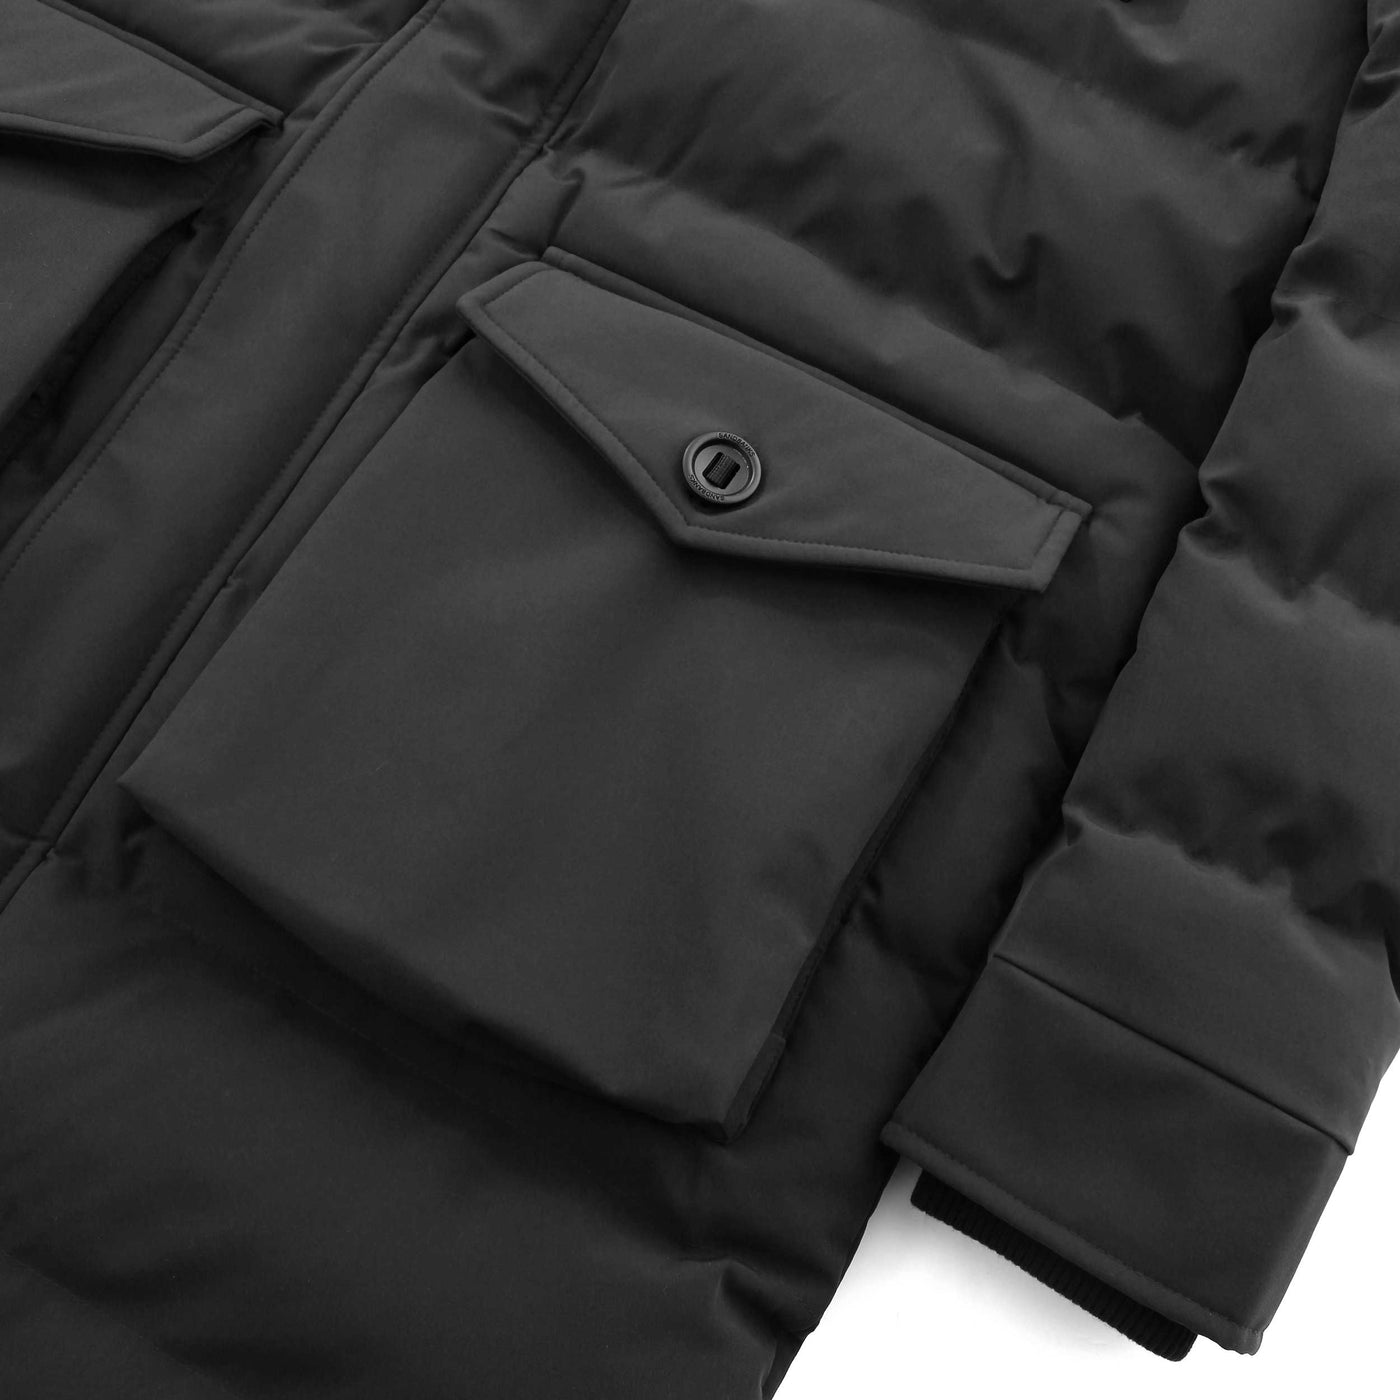 Sandbanks Branksome Long Puffer Jacket in Charcoal Pocket